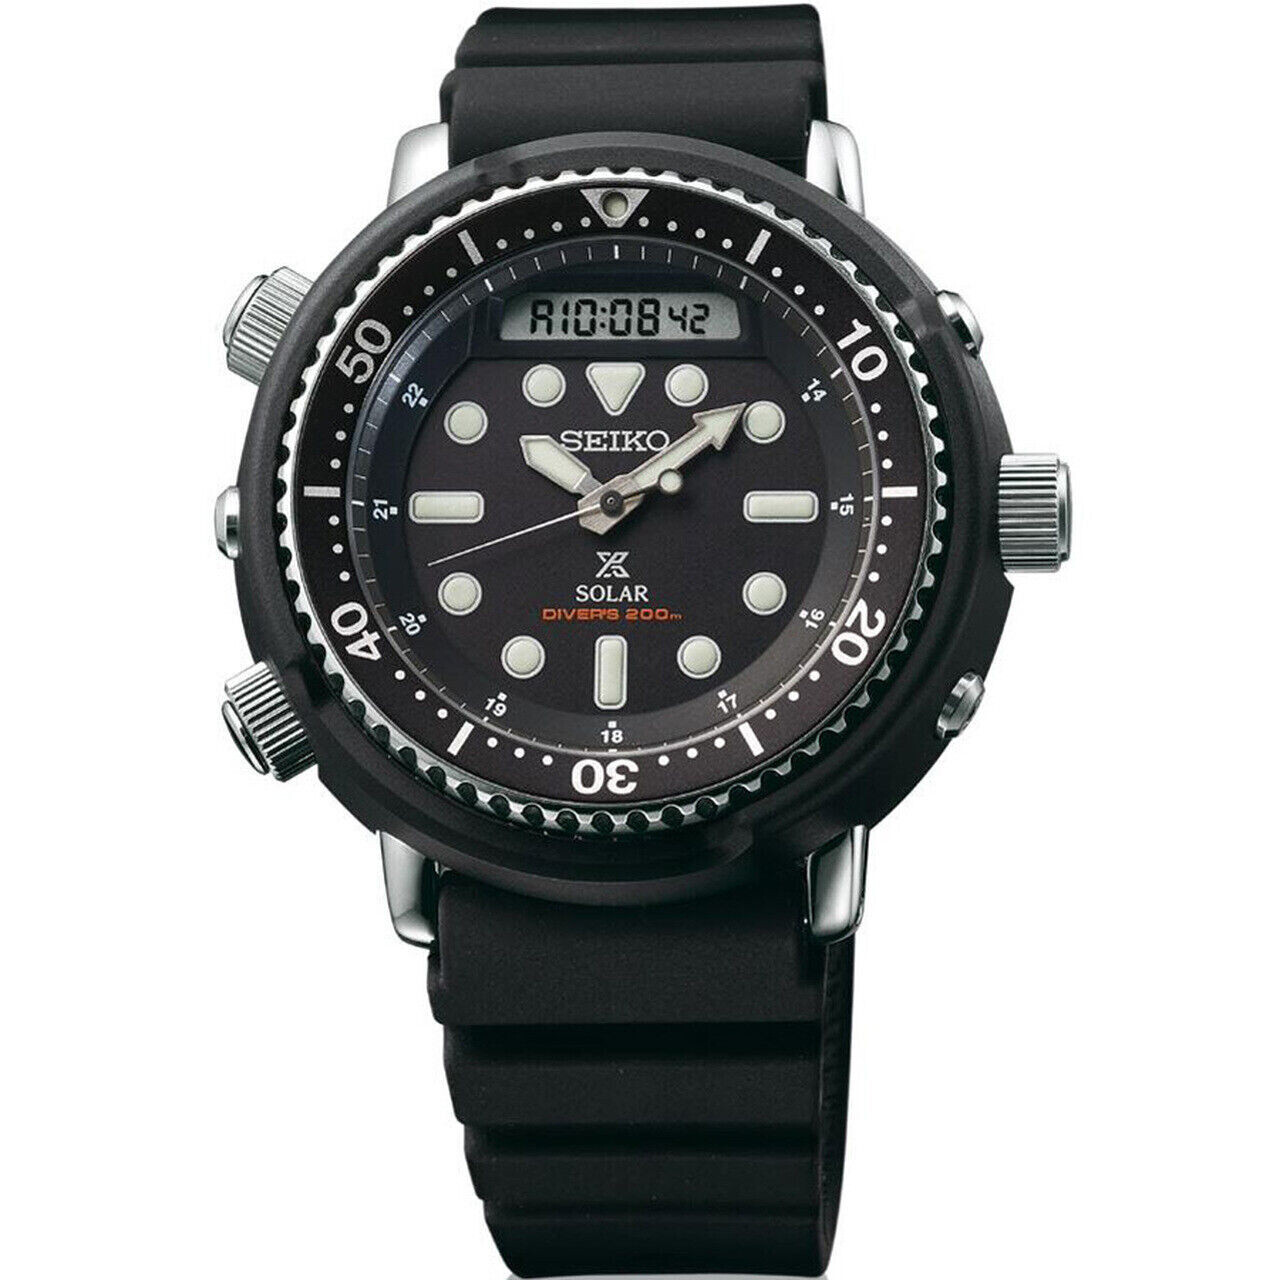 Seiko Prospex Solar ARNIE SNJ025P1 48mm 200m WR solar powered divers men’s watch rubber band